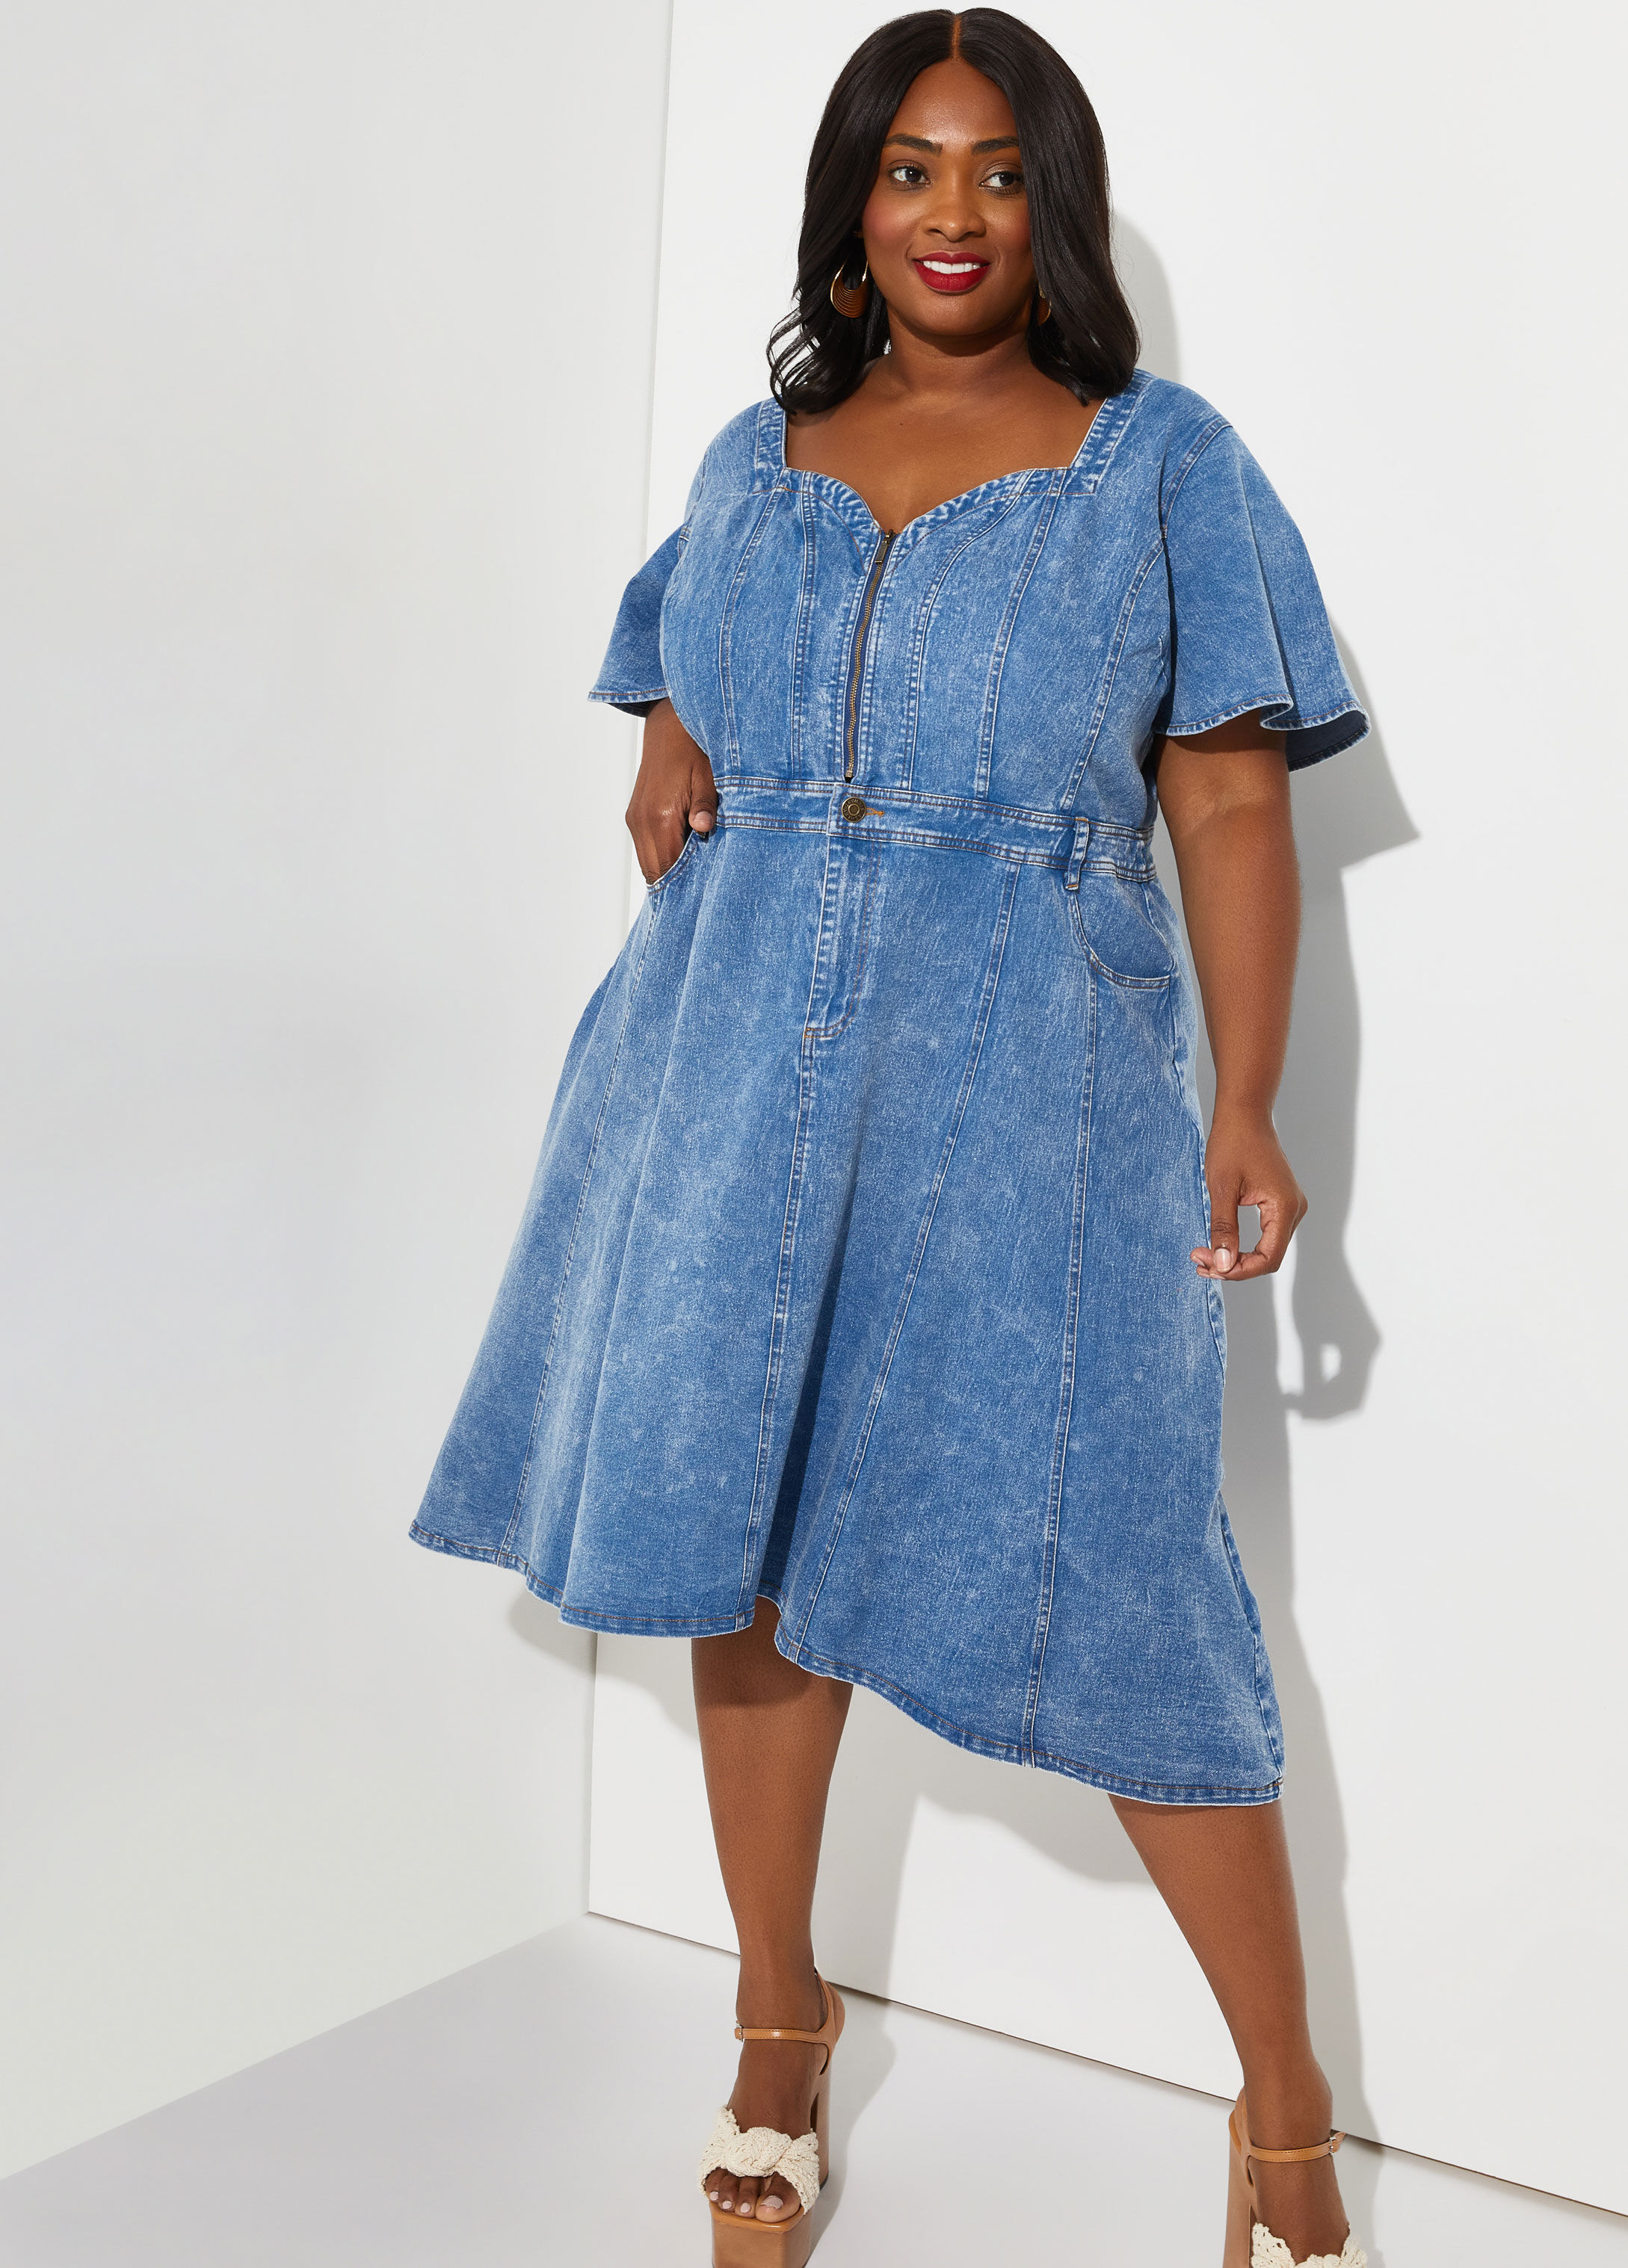 generic Denim Dress Retro Embroidery Soft Casual Plus Size Women's Jeans  Dress (Color : Blue, Size : M Code) : Amazon.ca: Clothing, Shoes &  Accessories